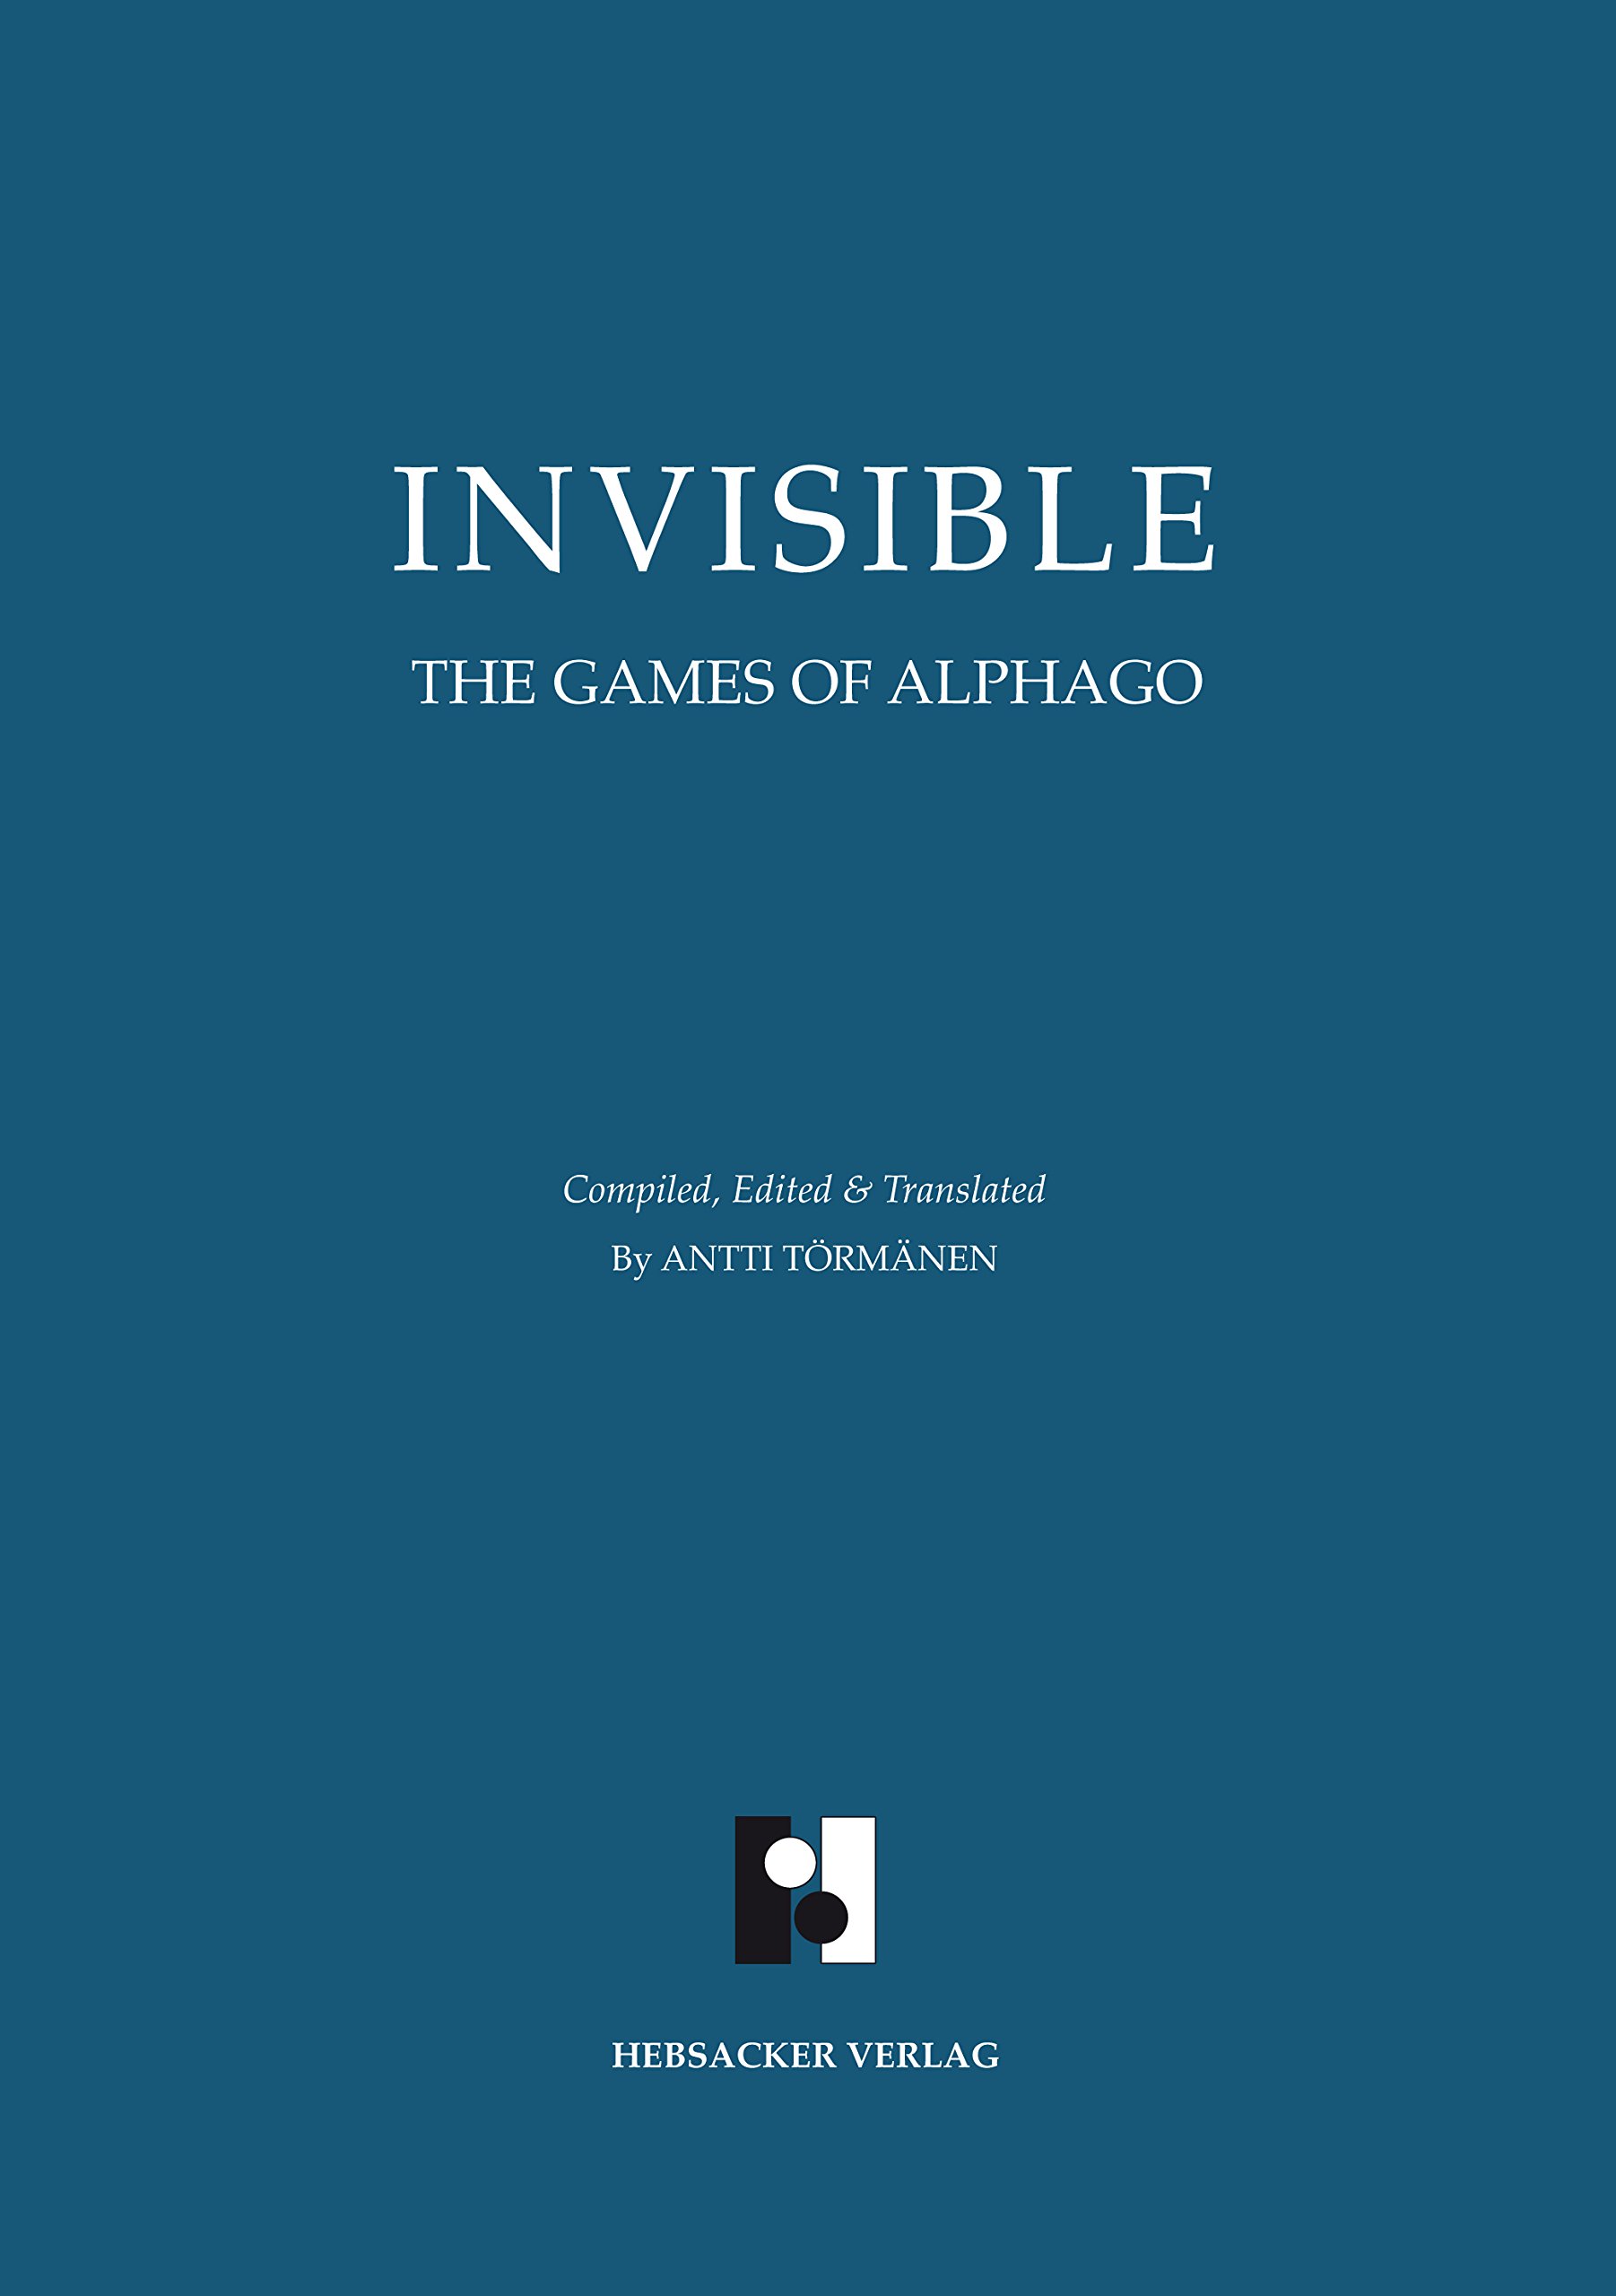 Invisible, The Games of AlphaGo